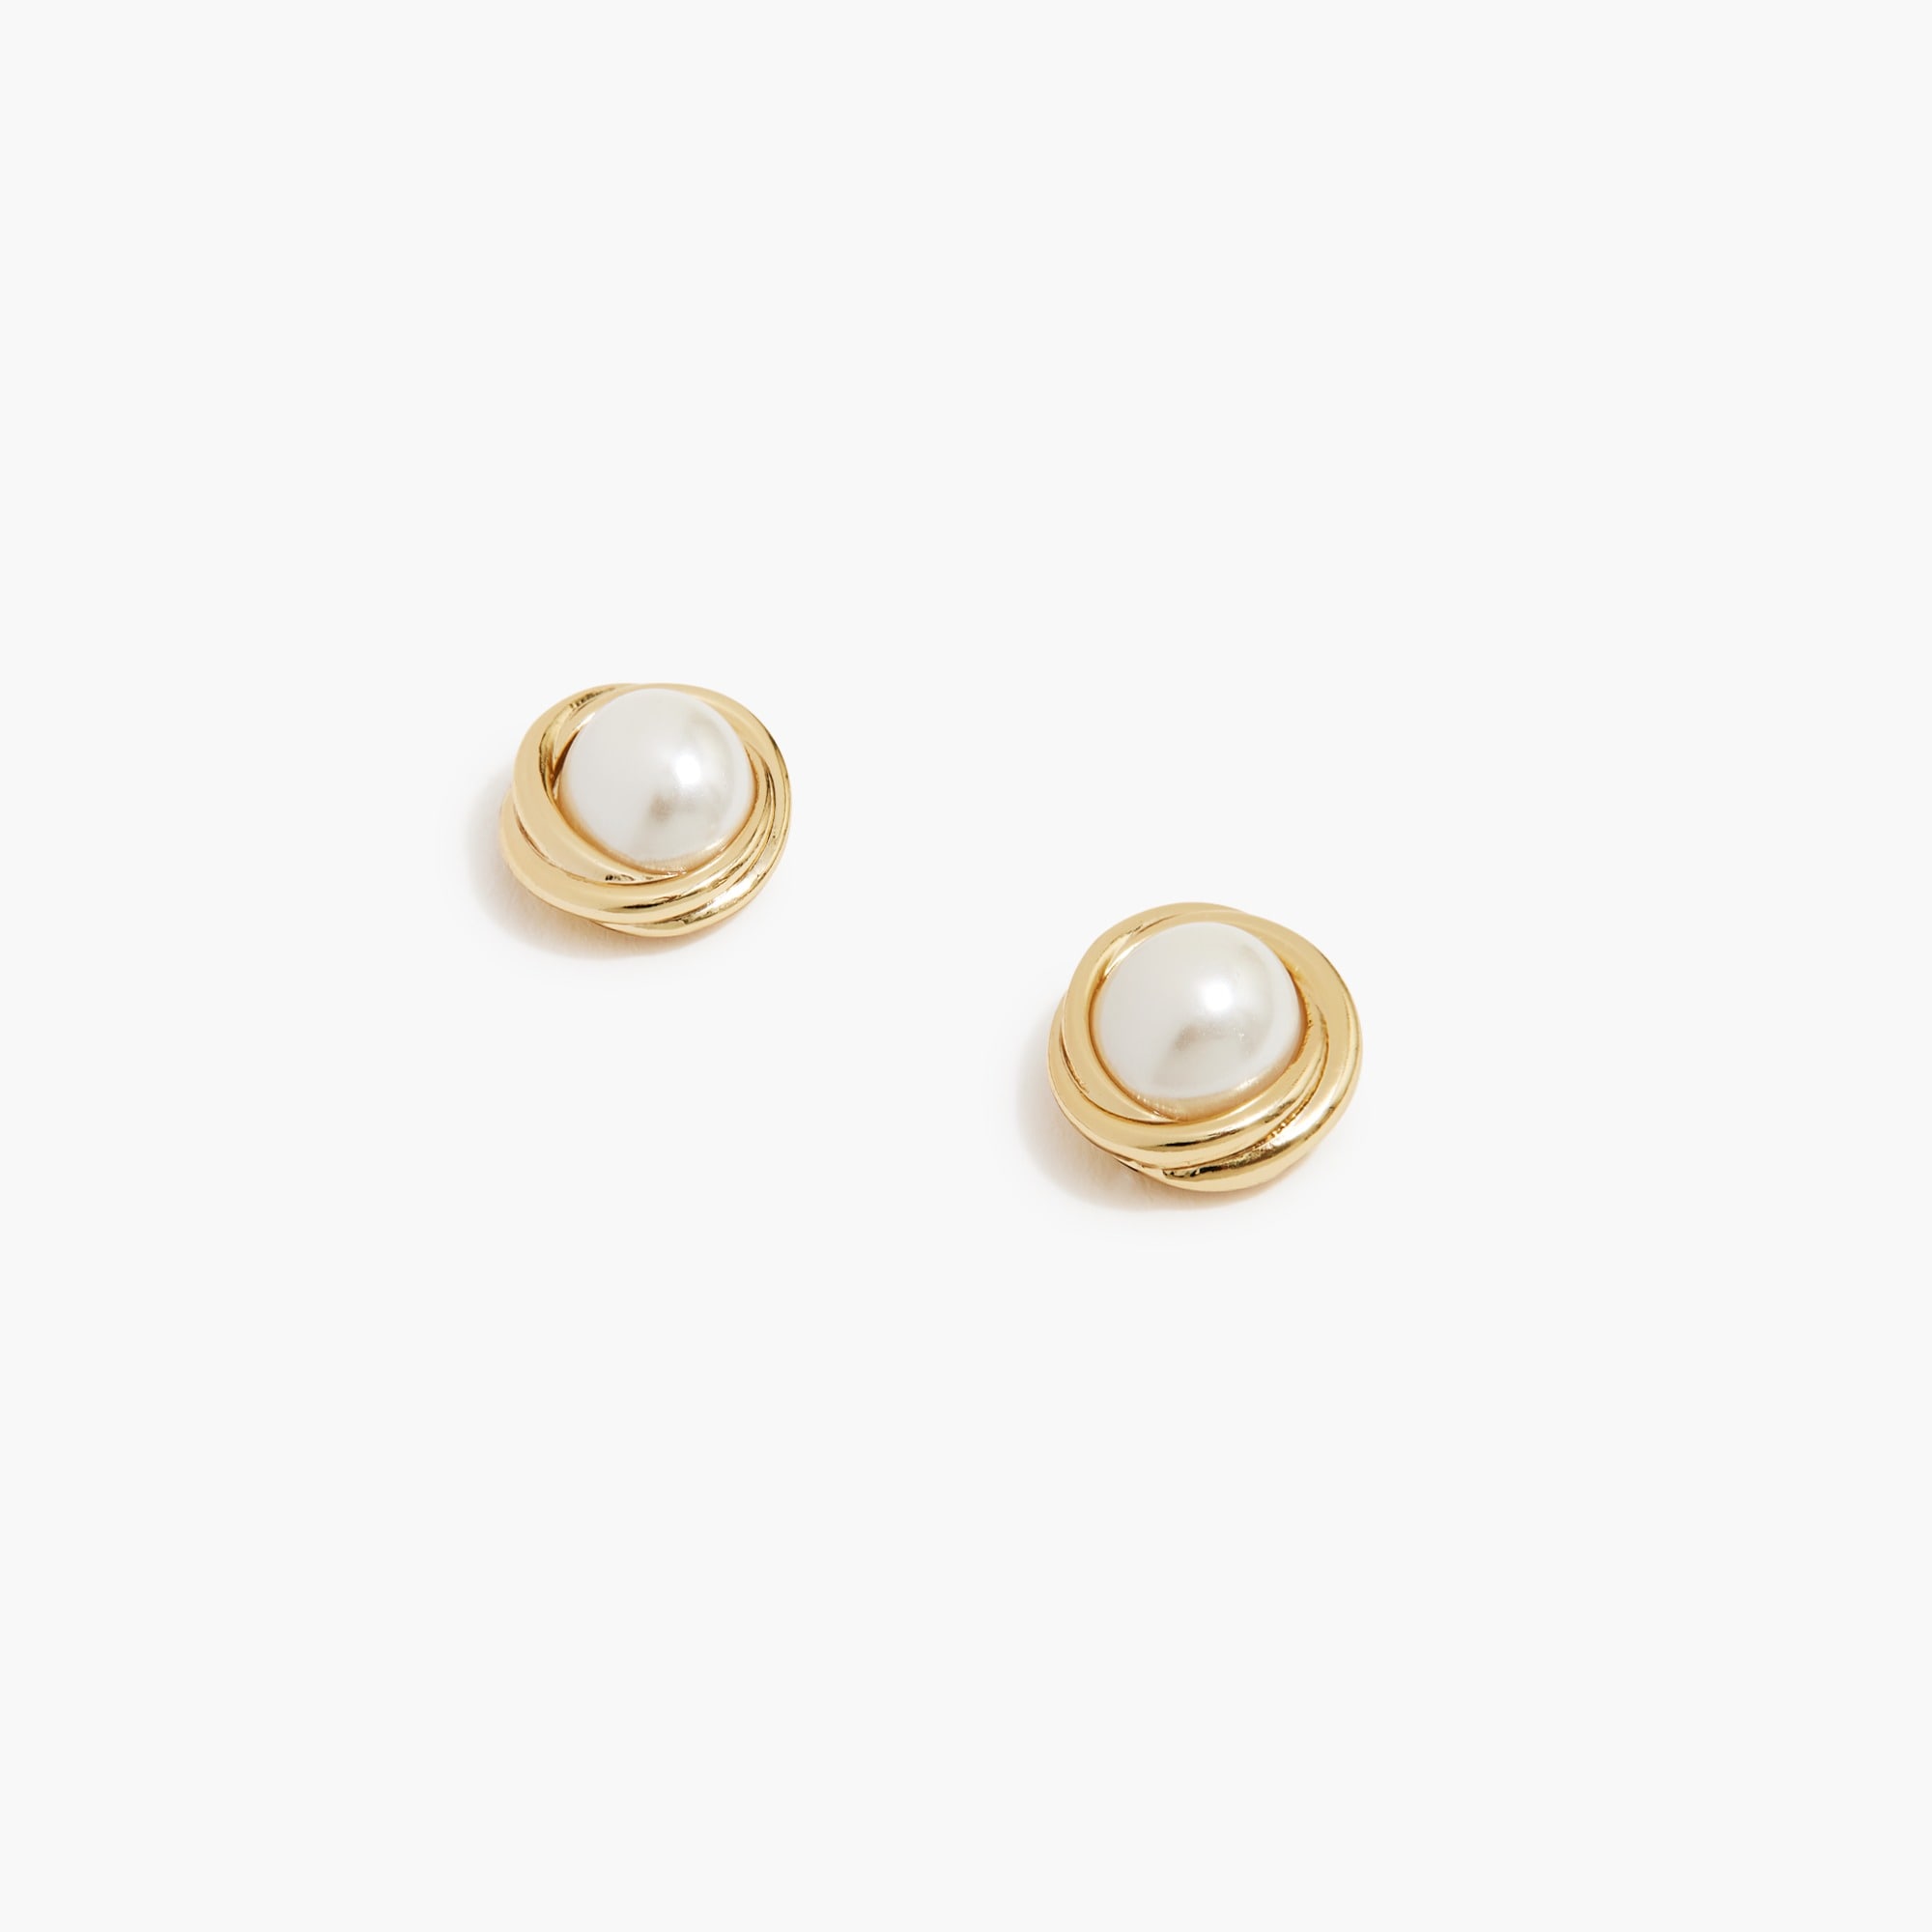 Jcrew Pearl and gold stud earrings